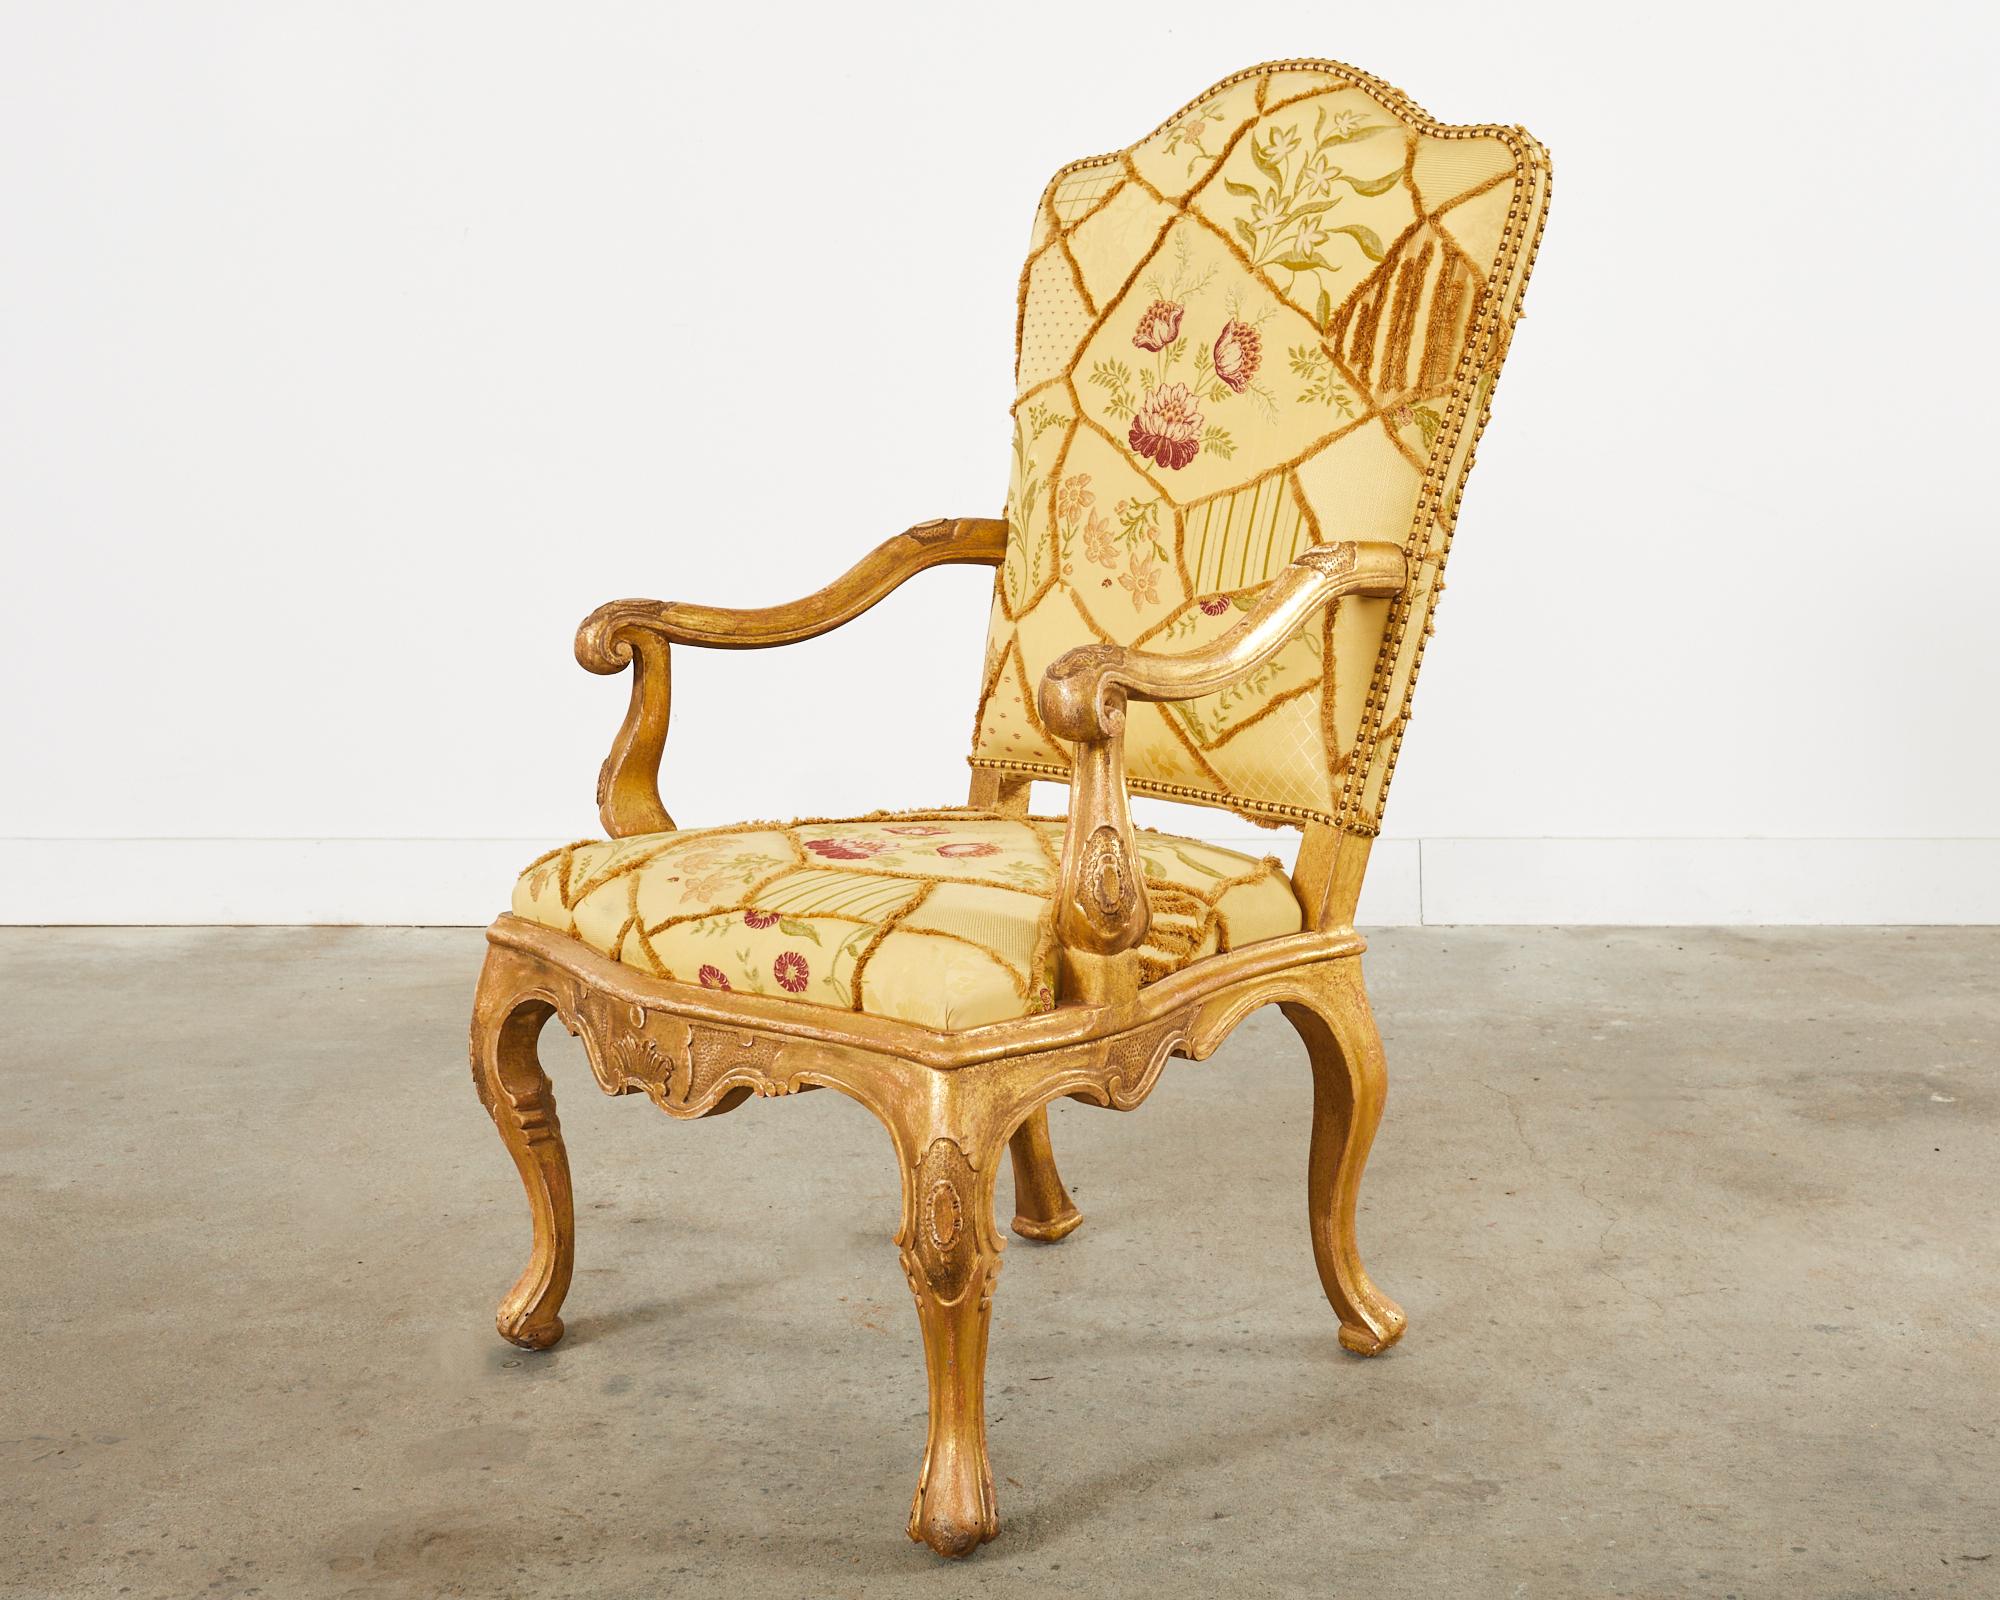 Hand-Crafted Hendrix Allardyce Italian Baroque Style Gilt Throne Chair For Sale